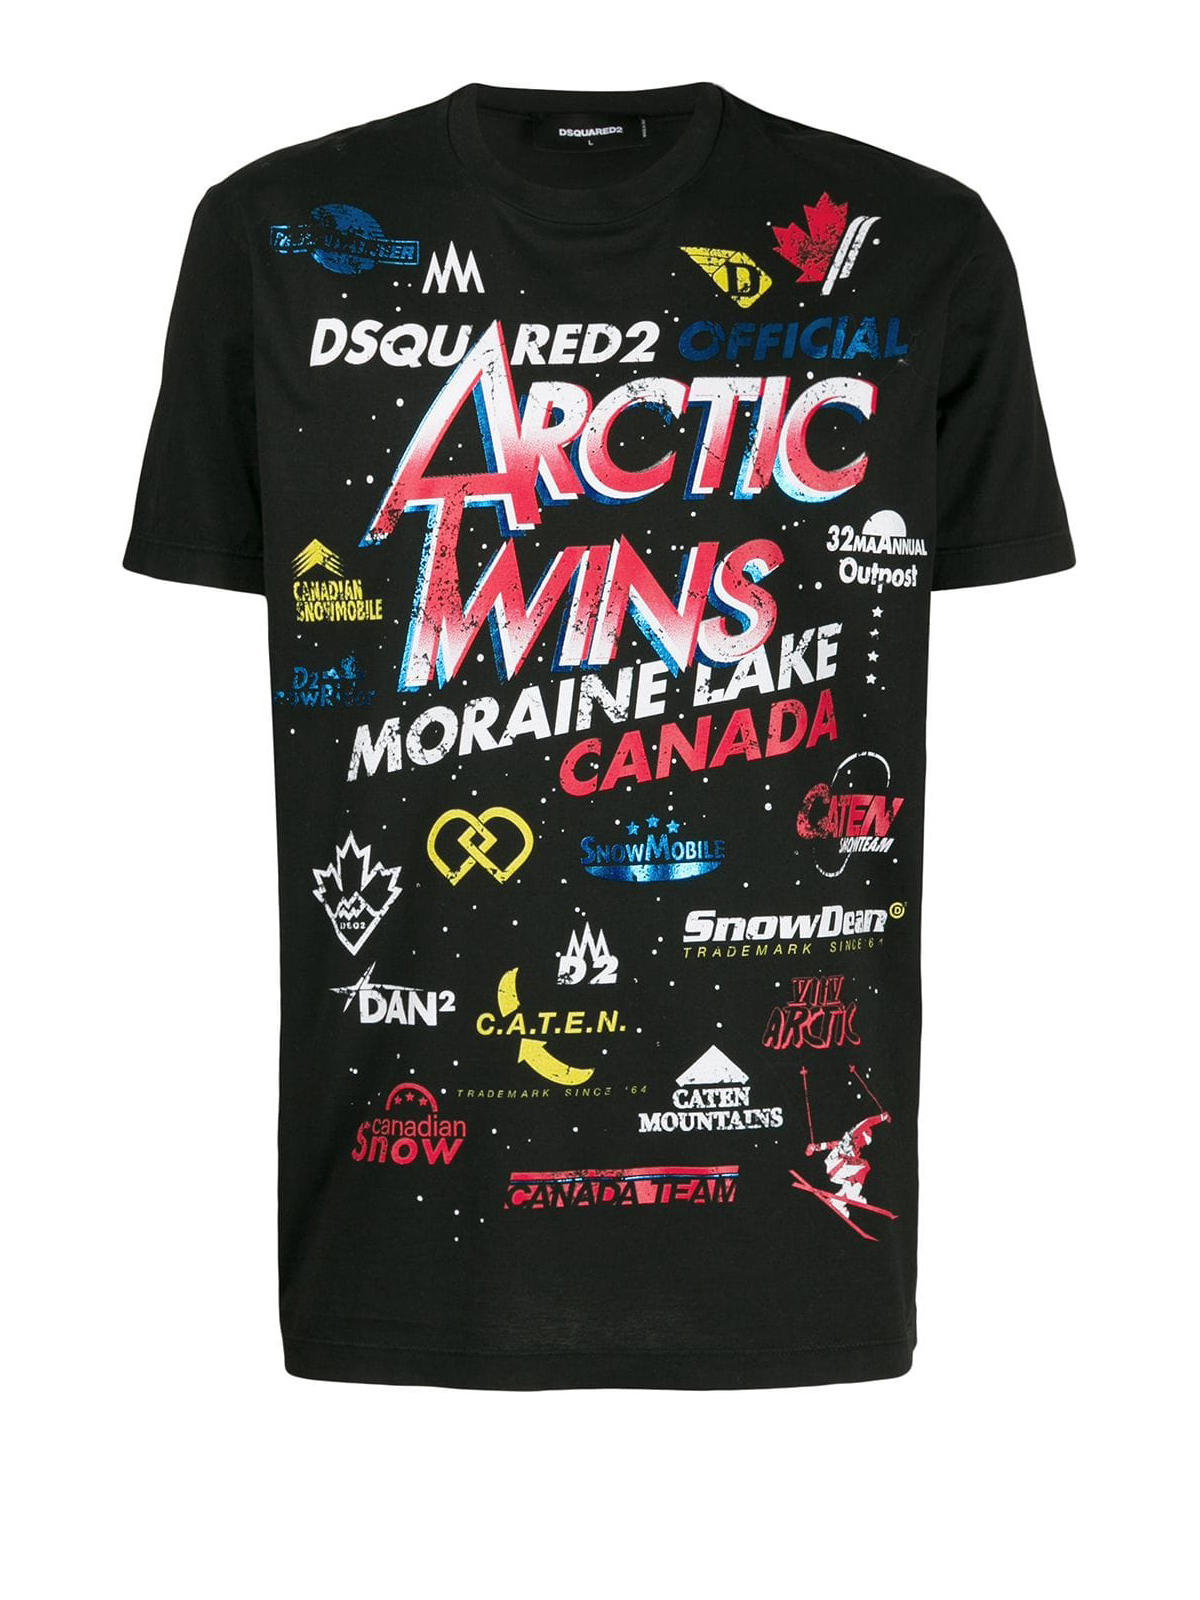 dsquared arctic twins t shirt